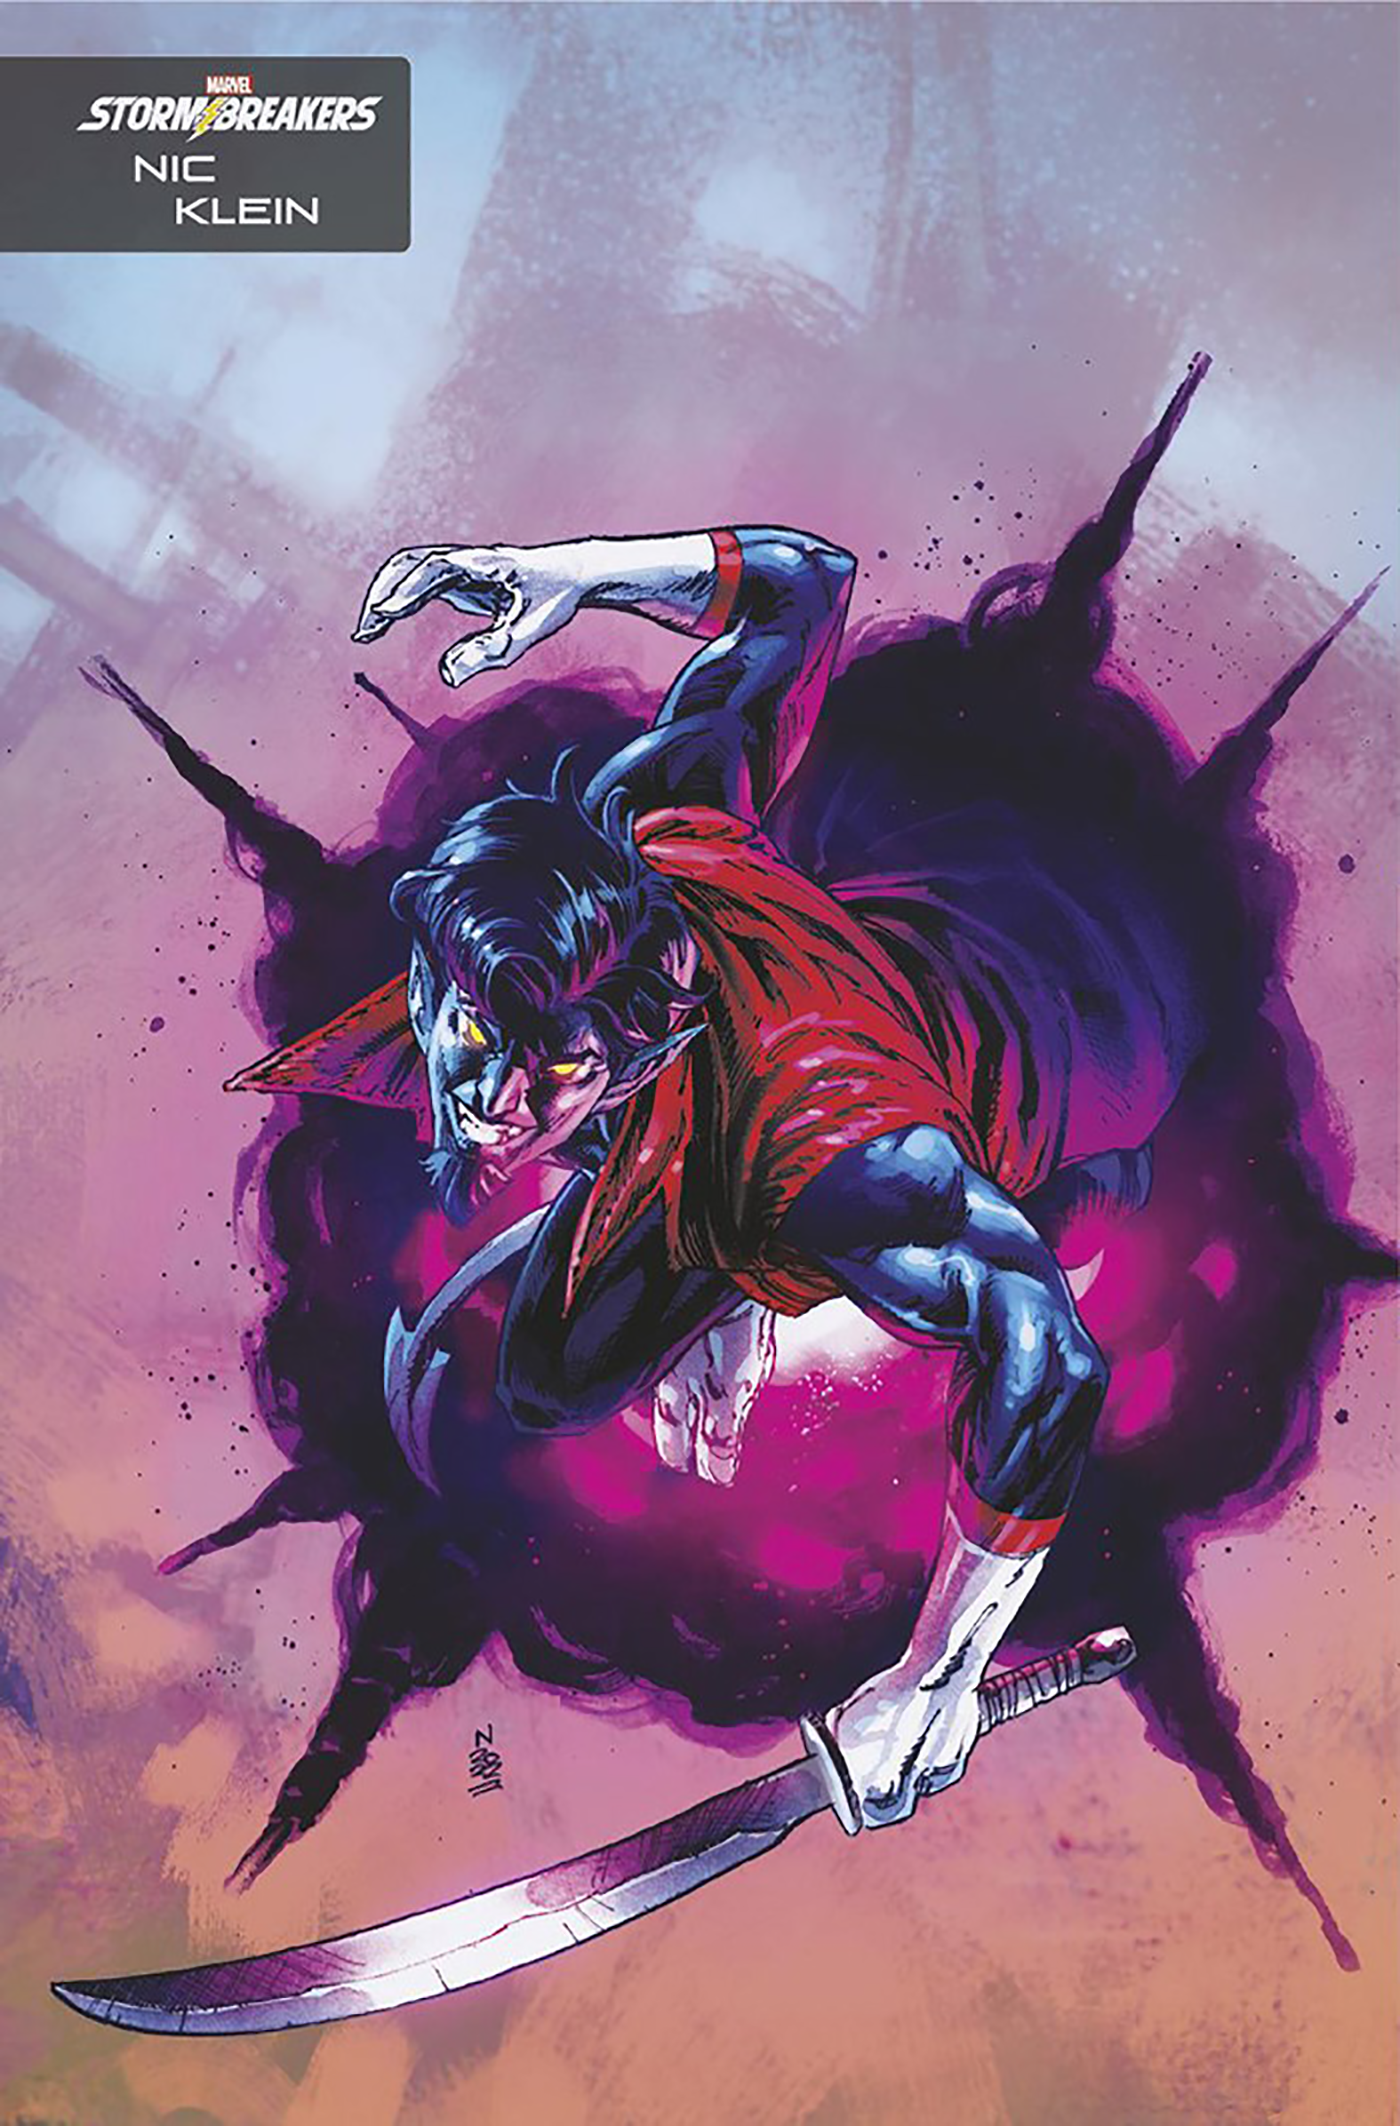 Marvel Reveals Variant Cover for Storm #1 